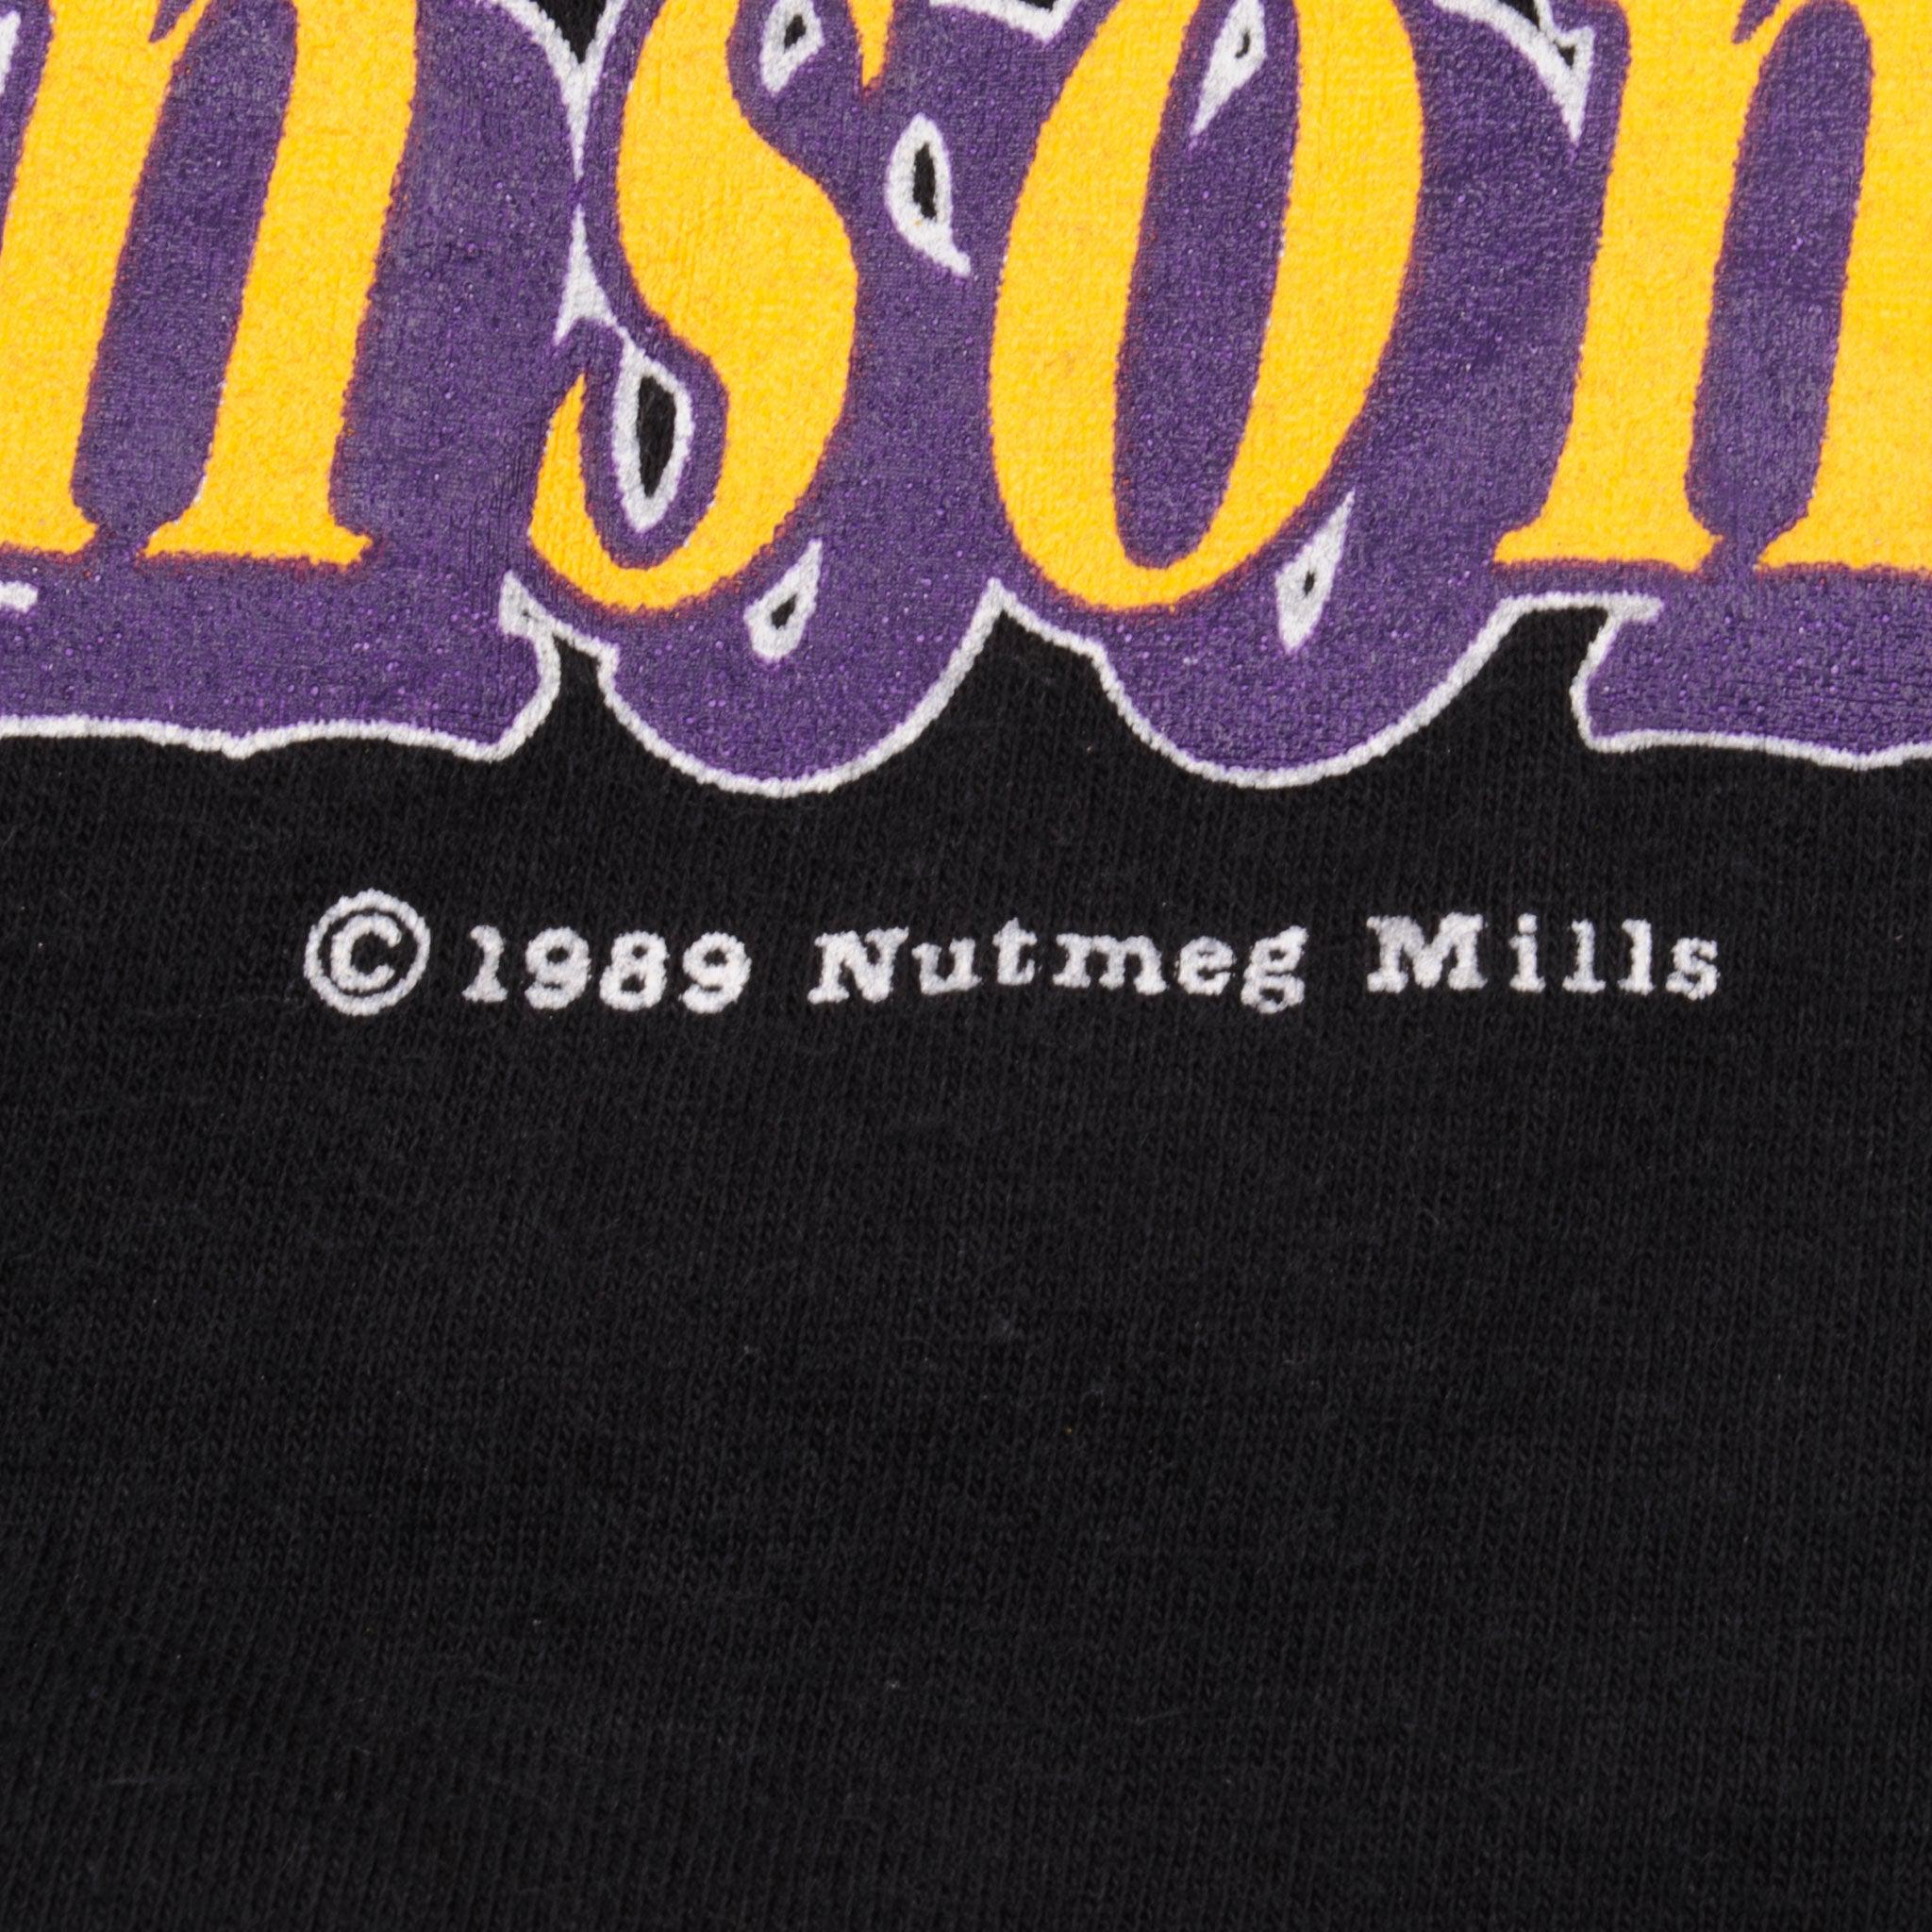 Vintage Los Angeles Lakers Magic Johnson Shirt Size Small